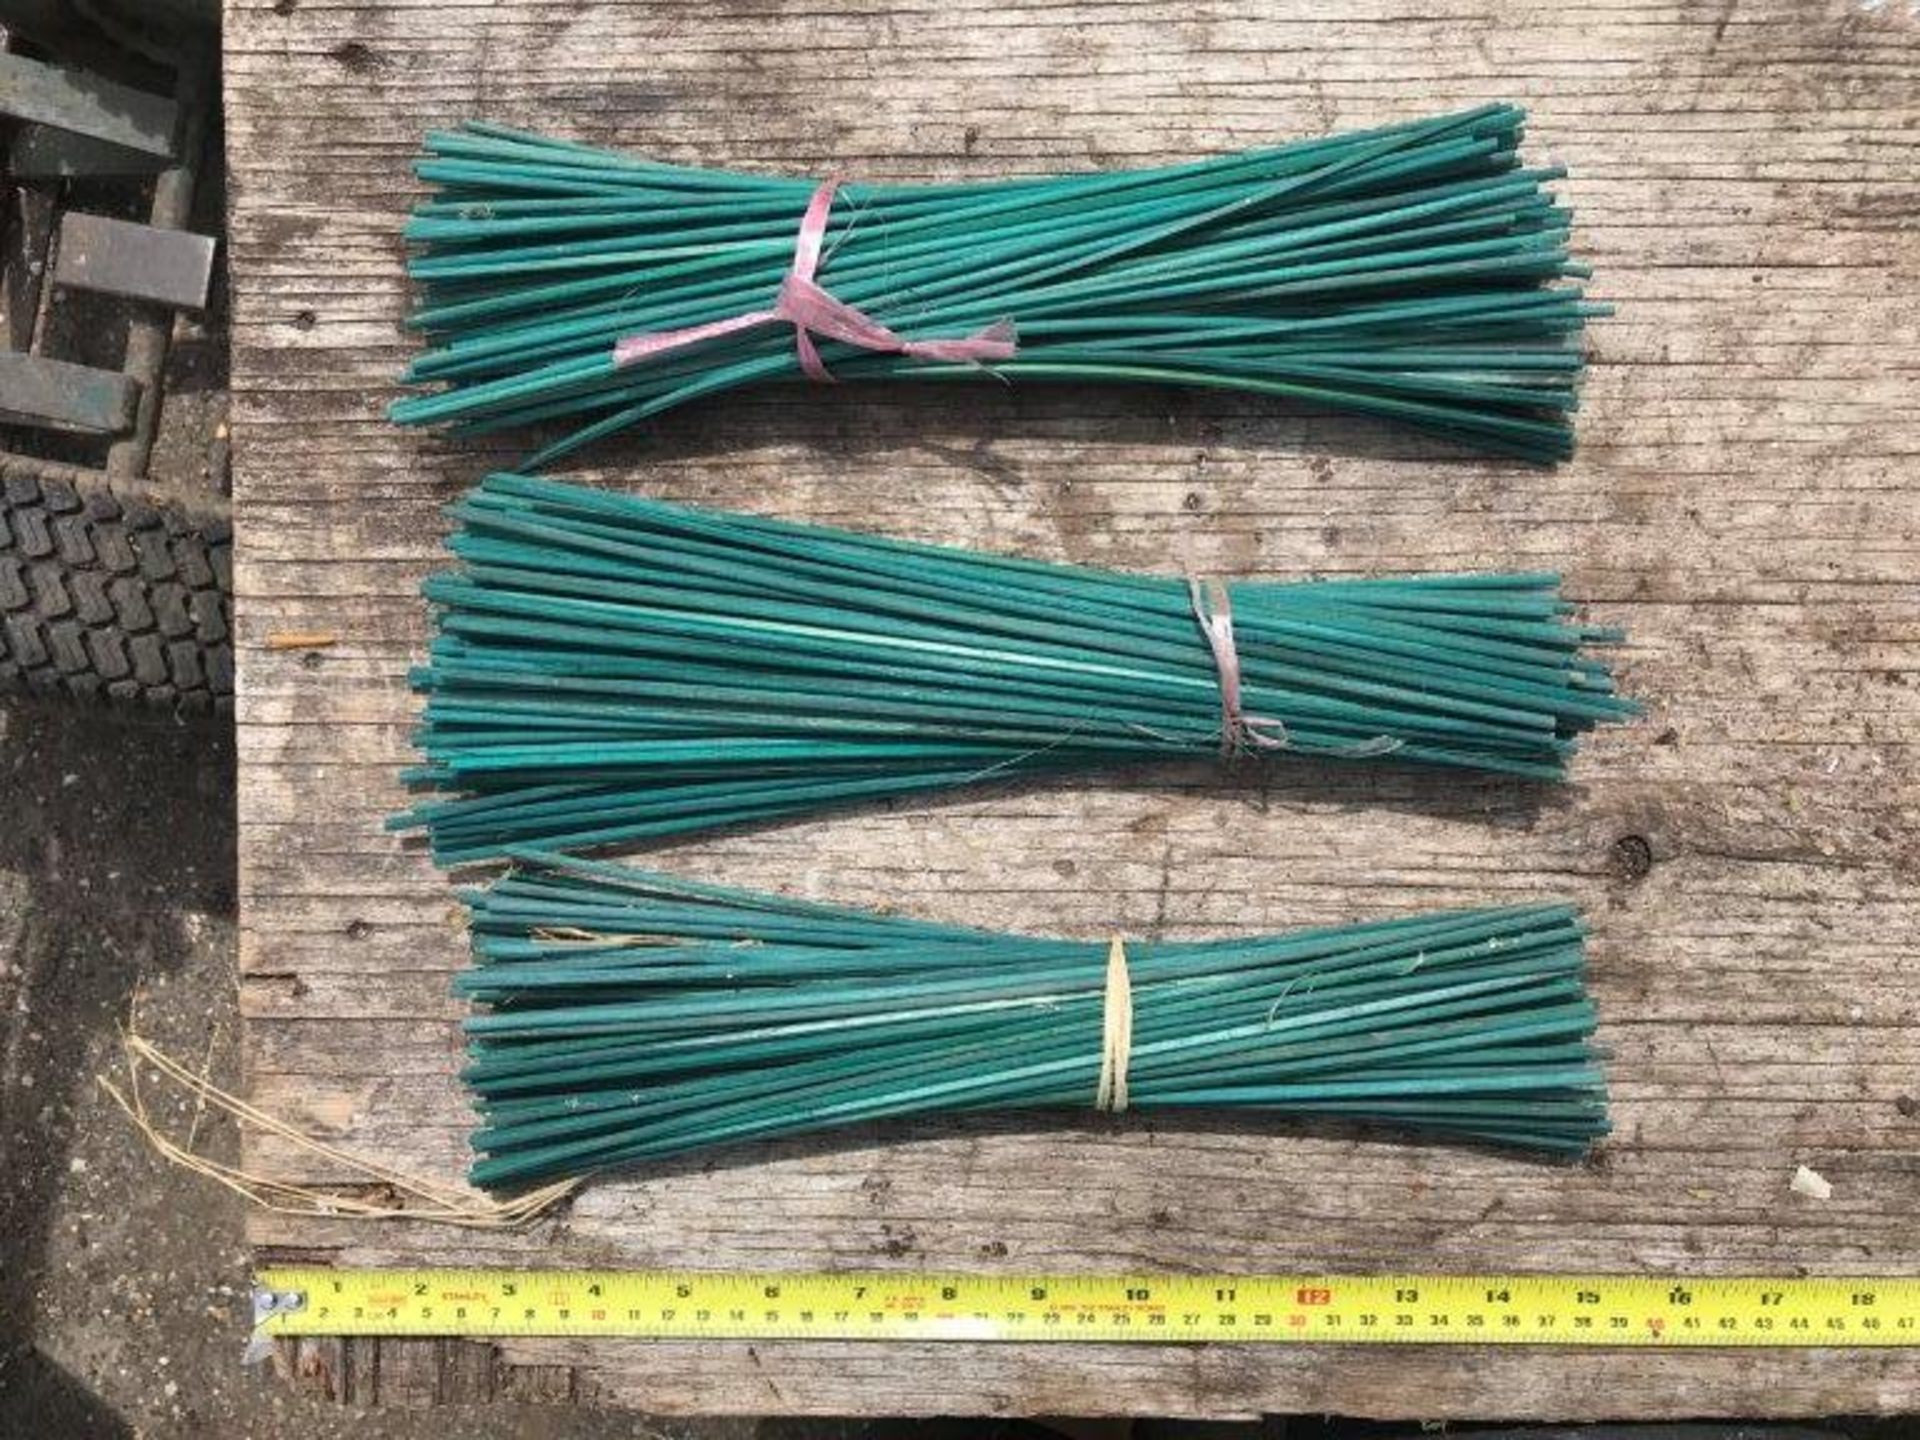 23 bundles of 12" green canes plus 1 bundle of 18" green canes